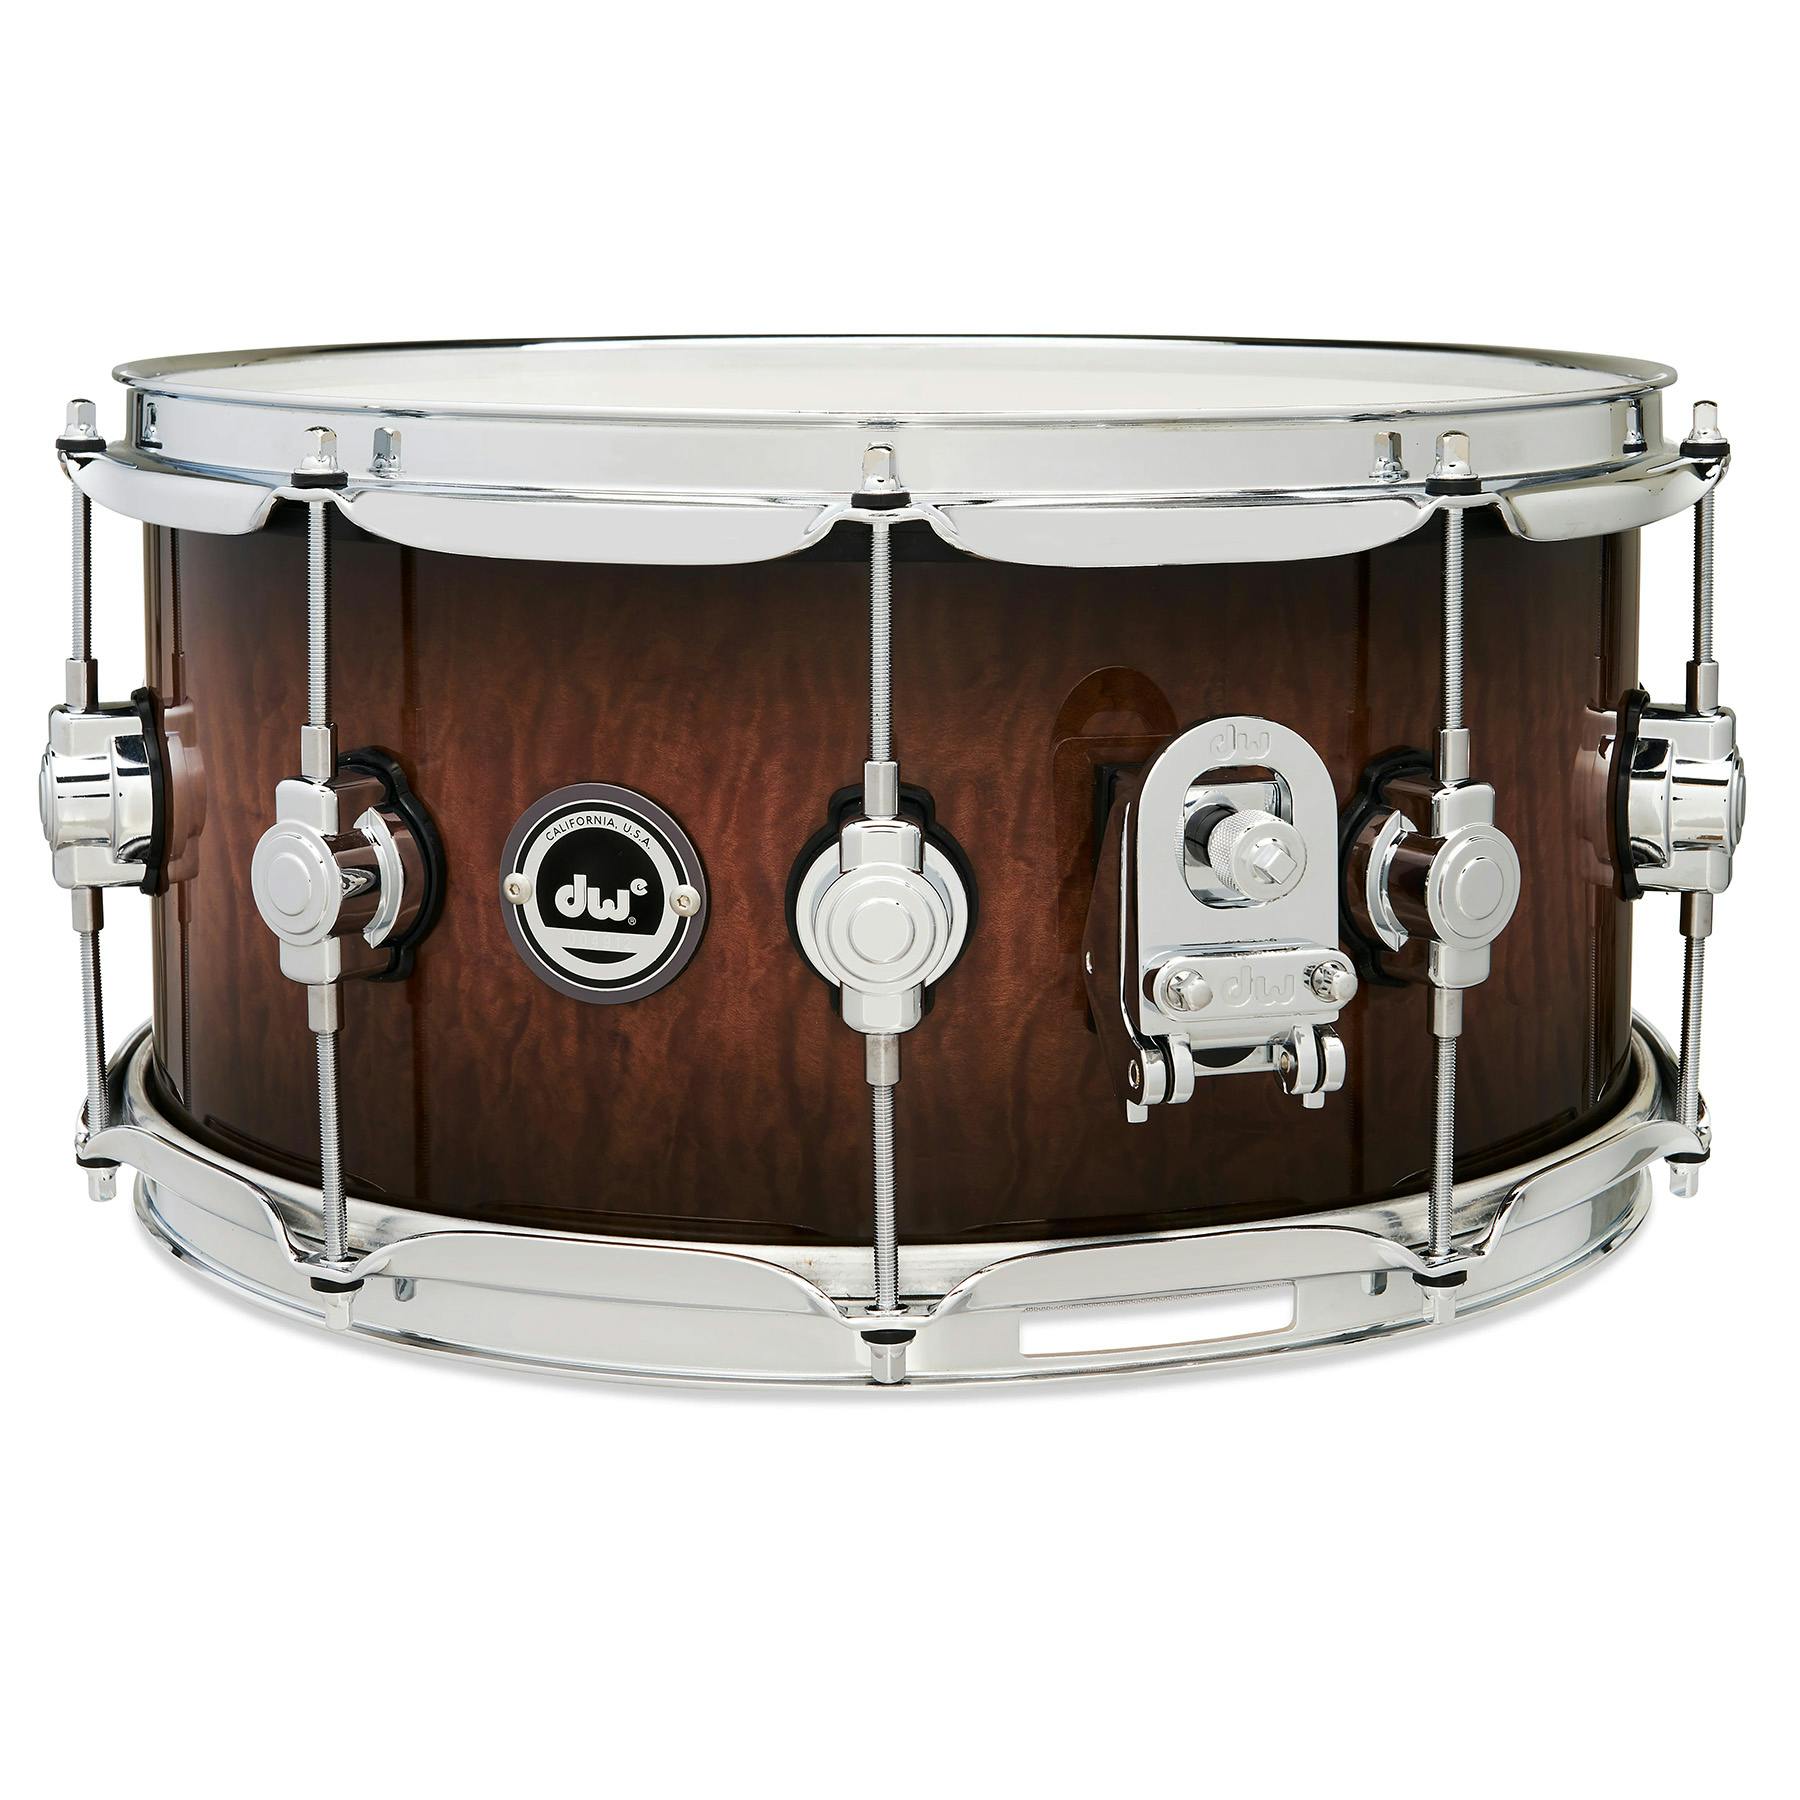 DWe Snare Drums